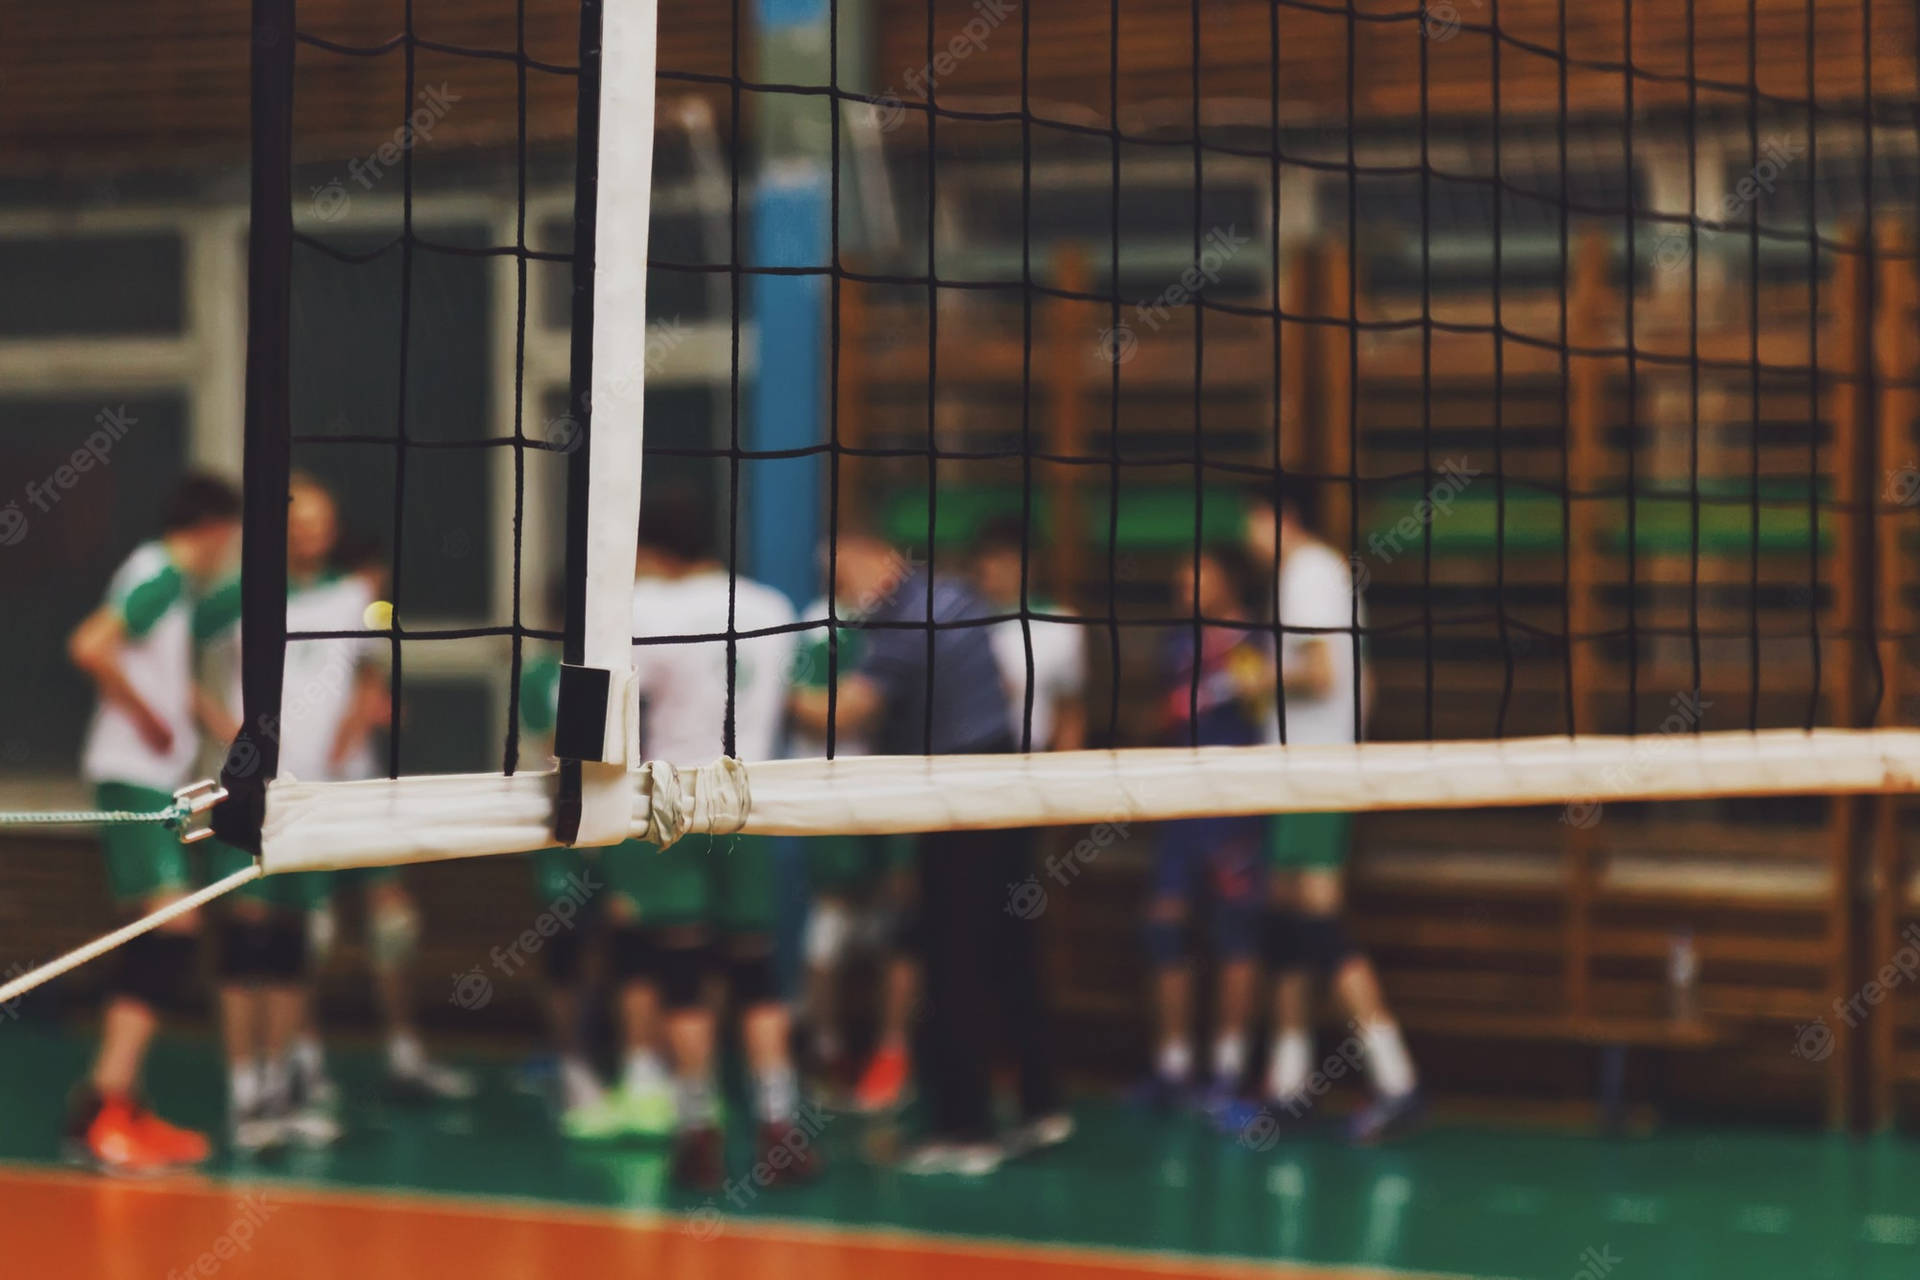 Et volleyball net i en gymnasium med mennesker, der spiller volleyball. Wallpaper